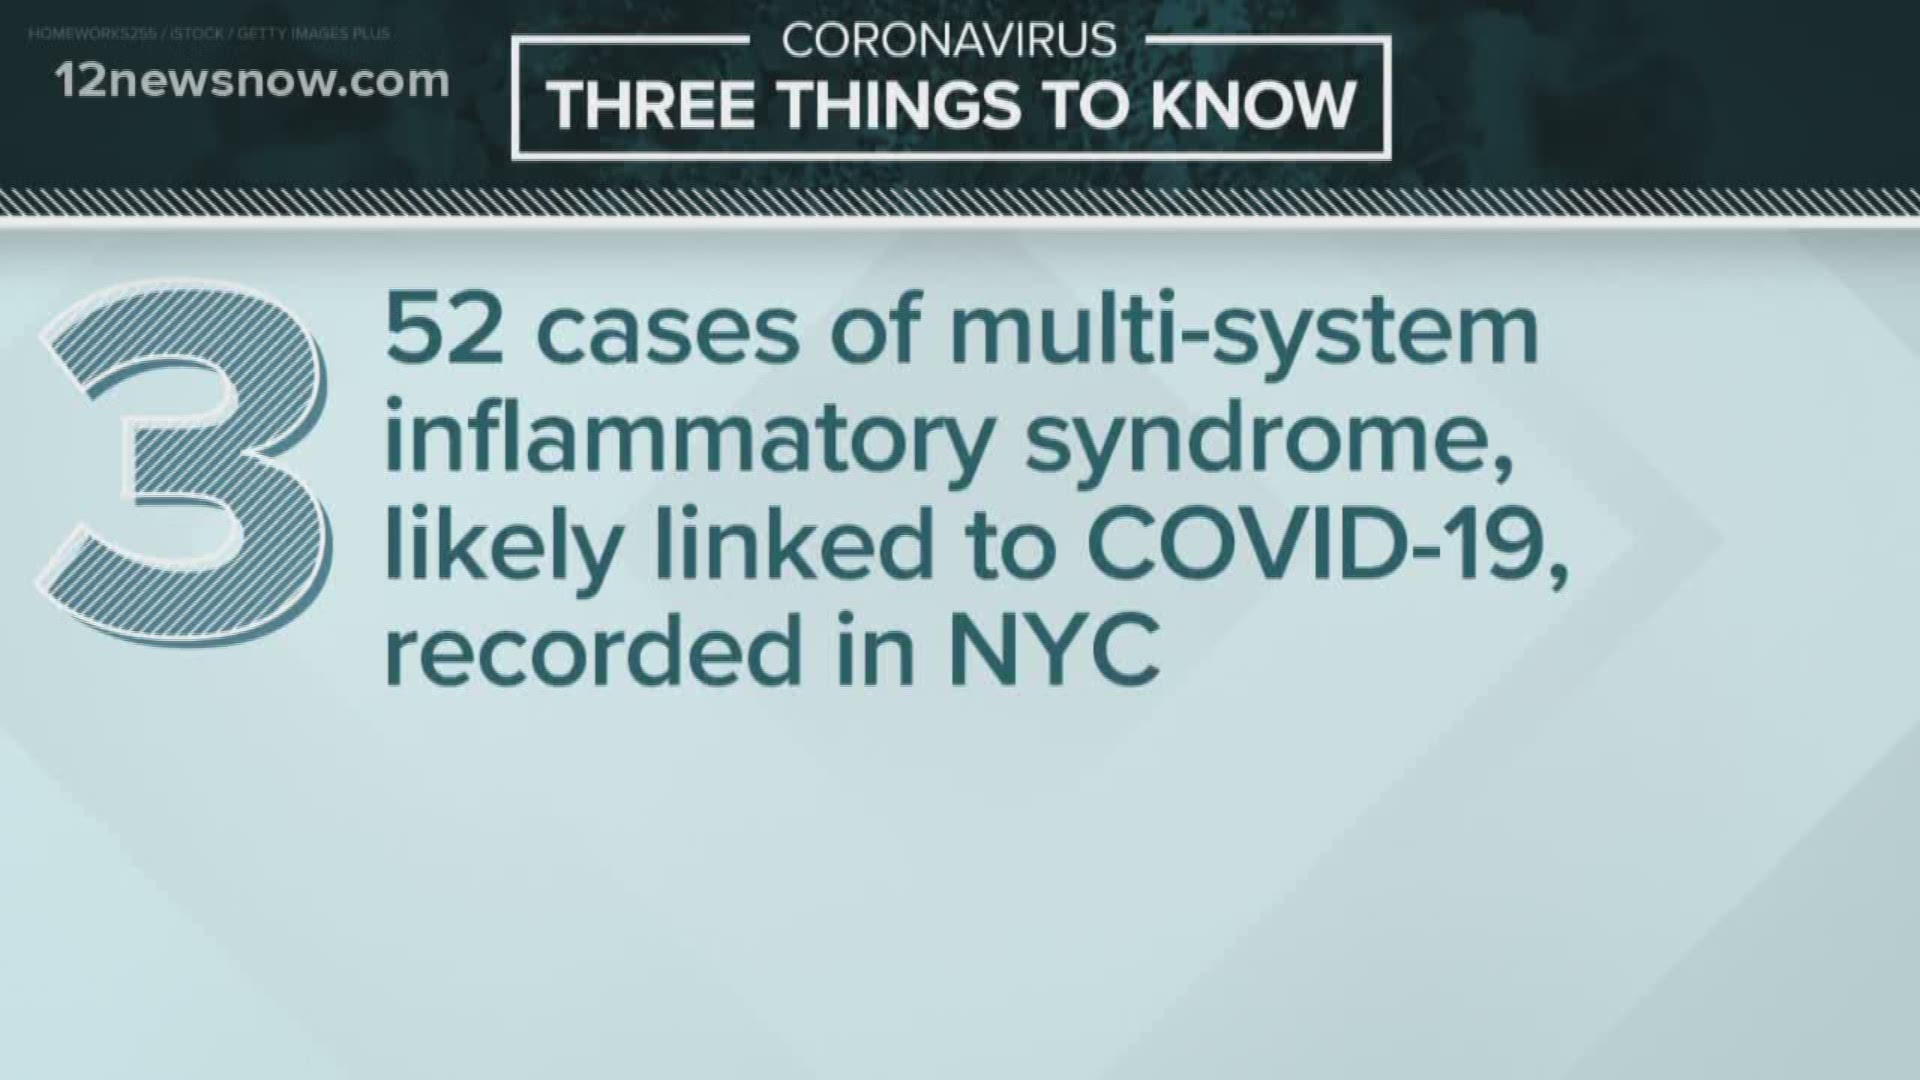 For more COVID-19 coverage, visit 12newsnow.com/coronavirus.